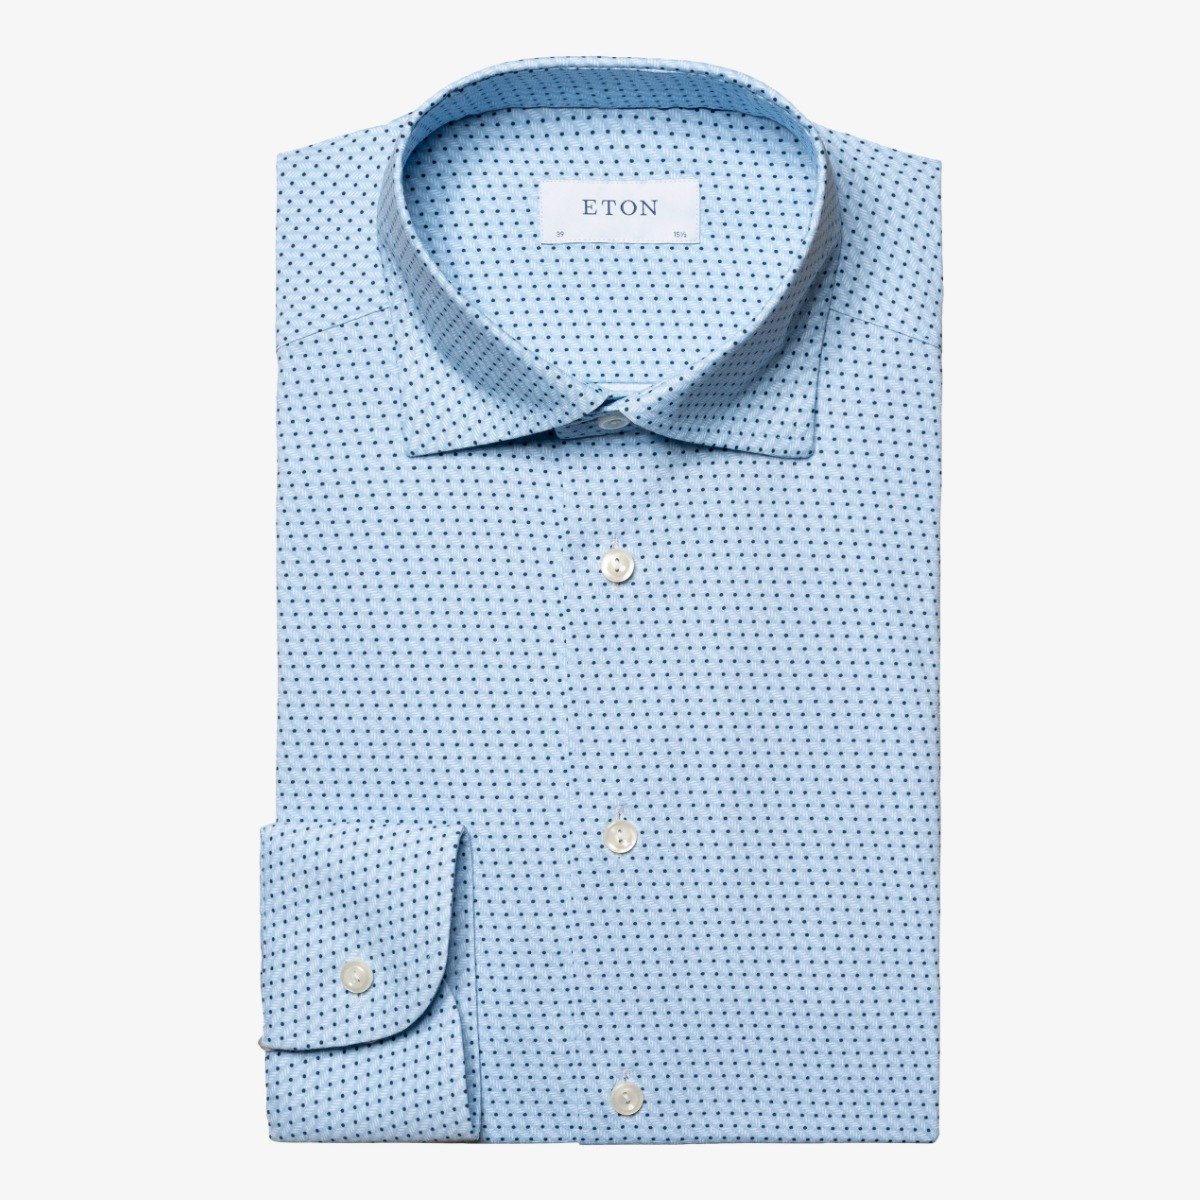 Eton mid blue slim fit pin dot four way stretch men's dress shirt